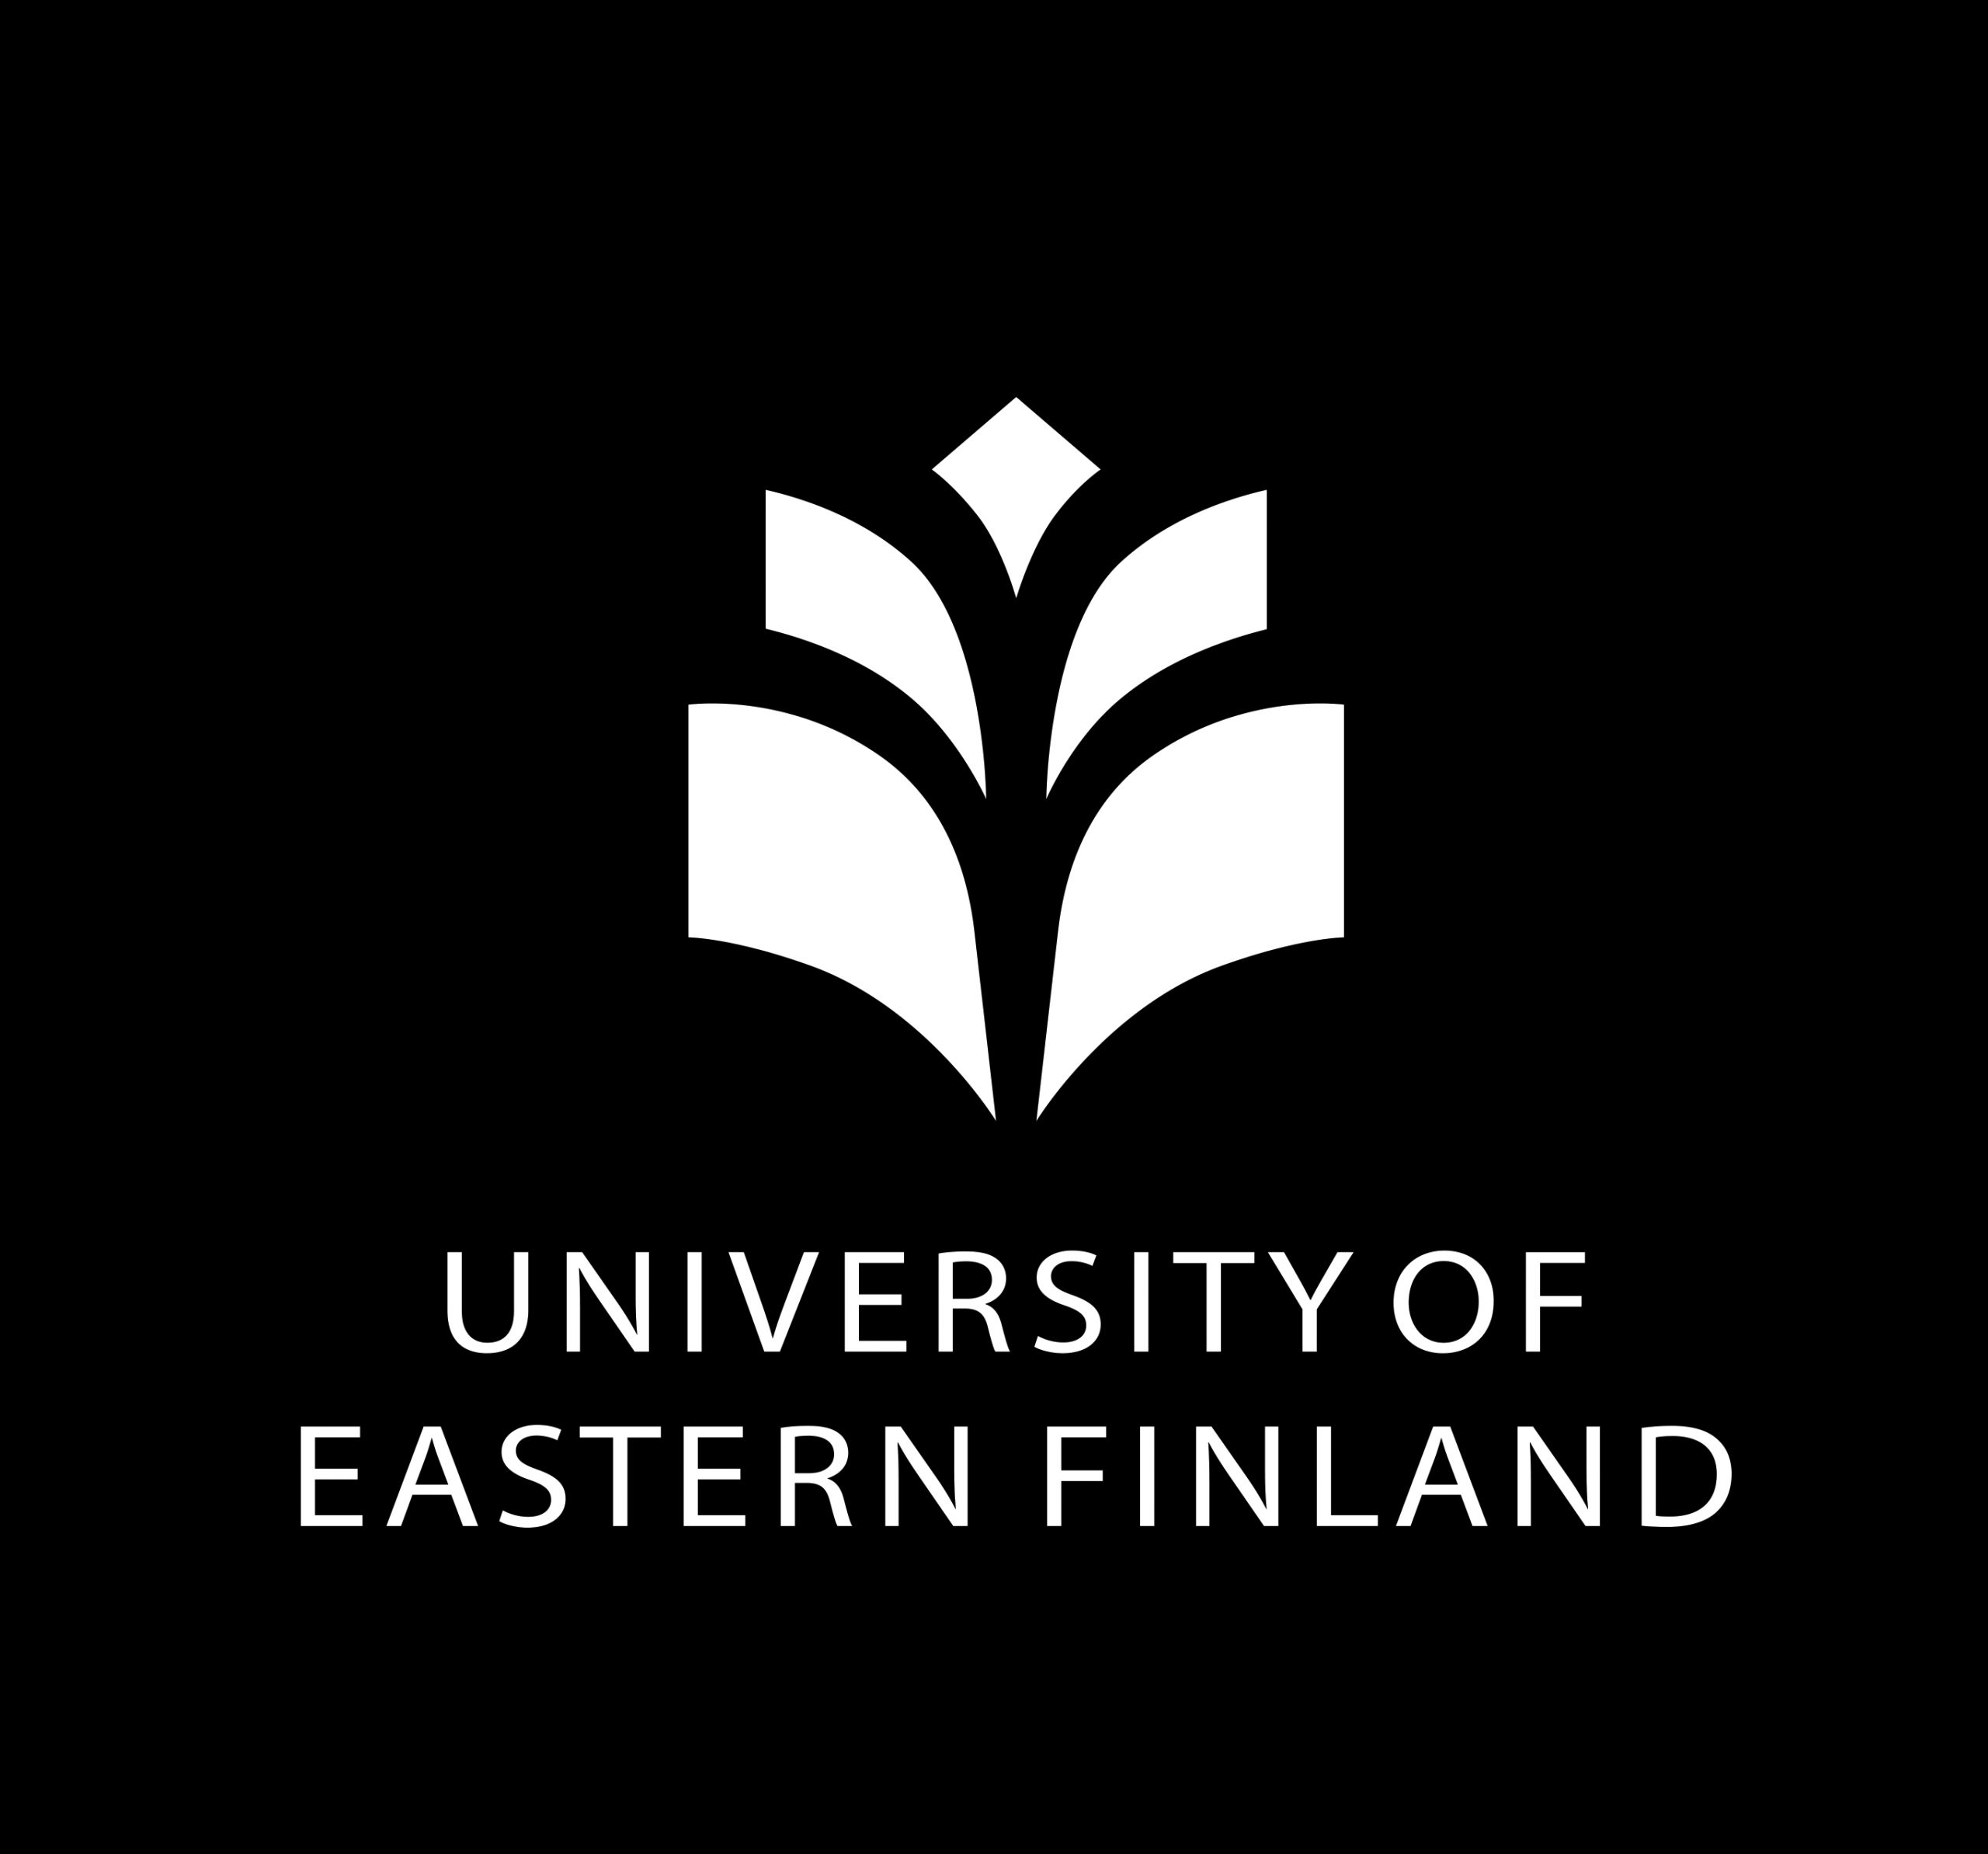 University of Eastern Finland logo on black background